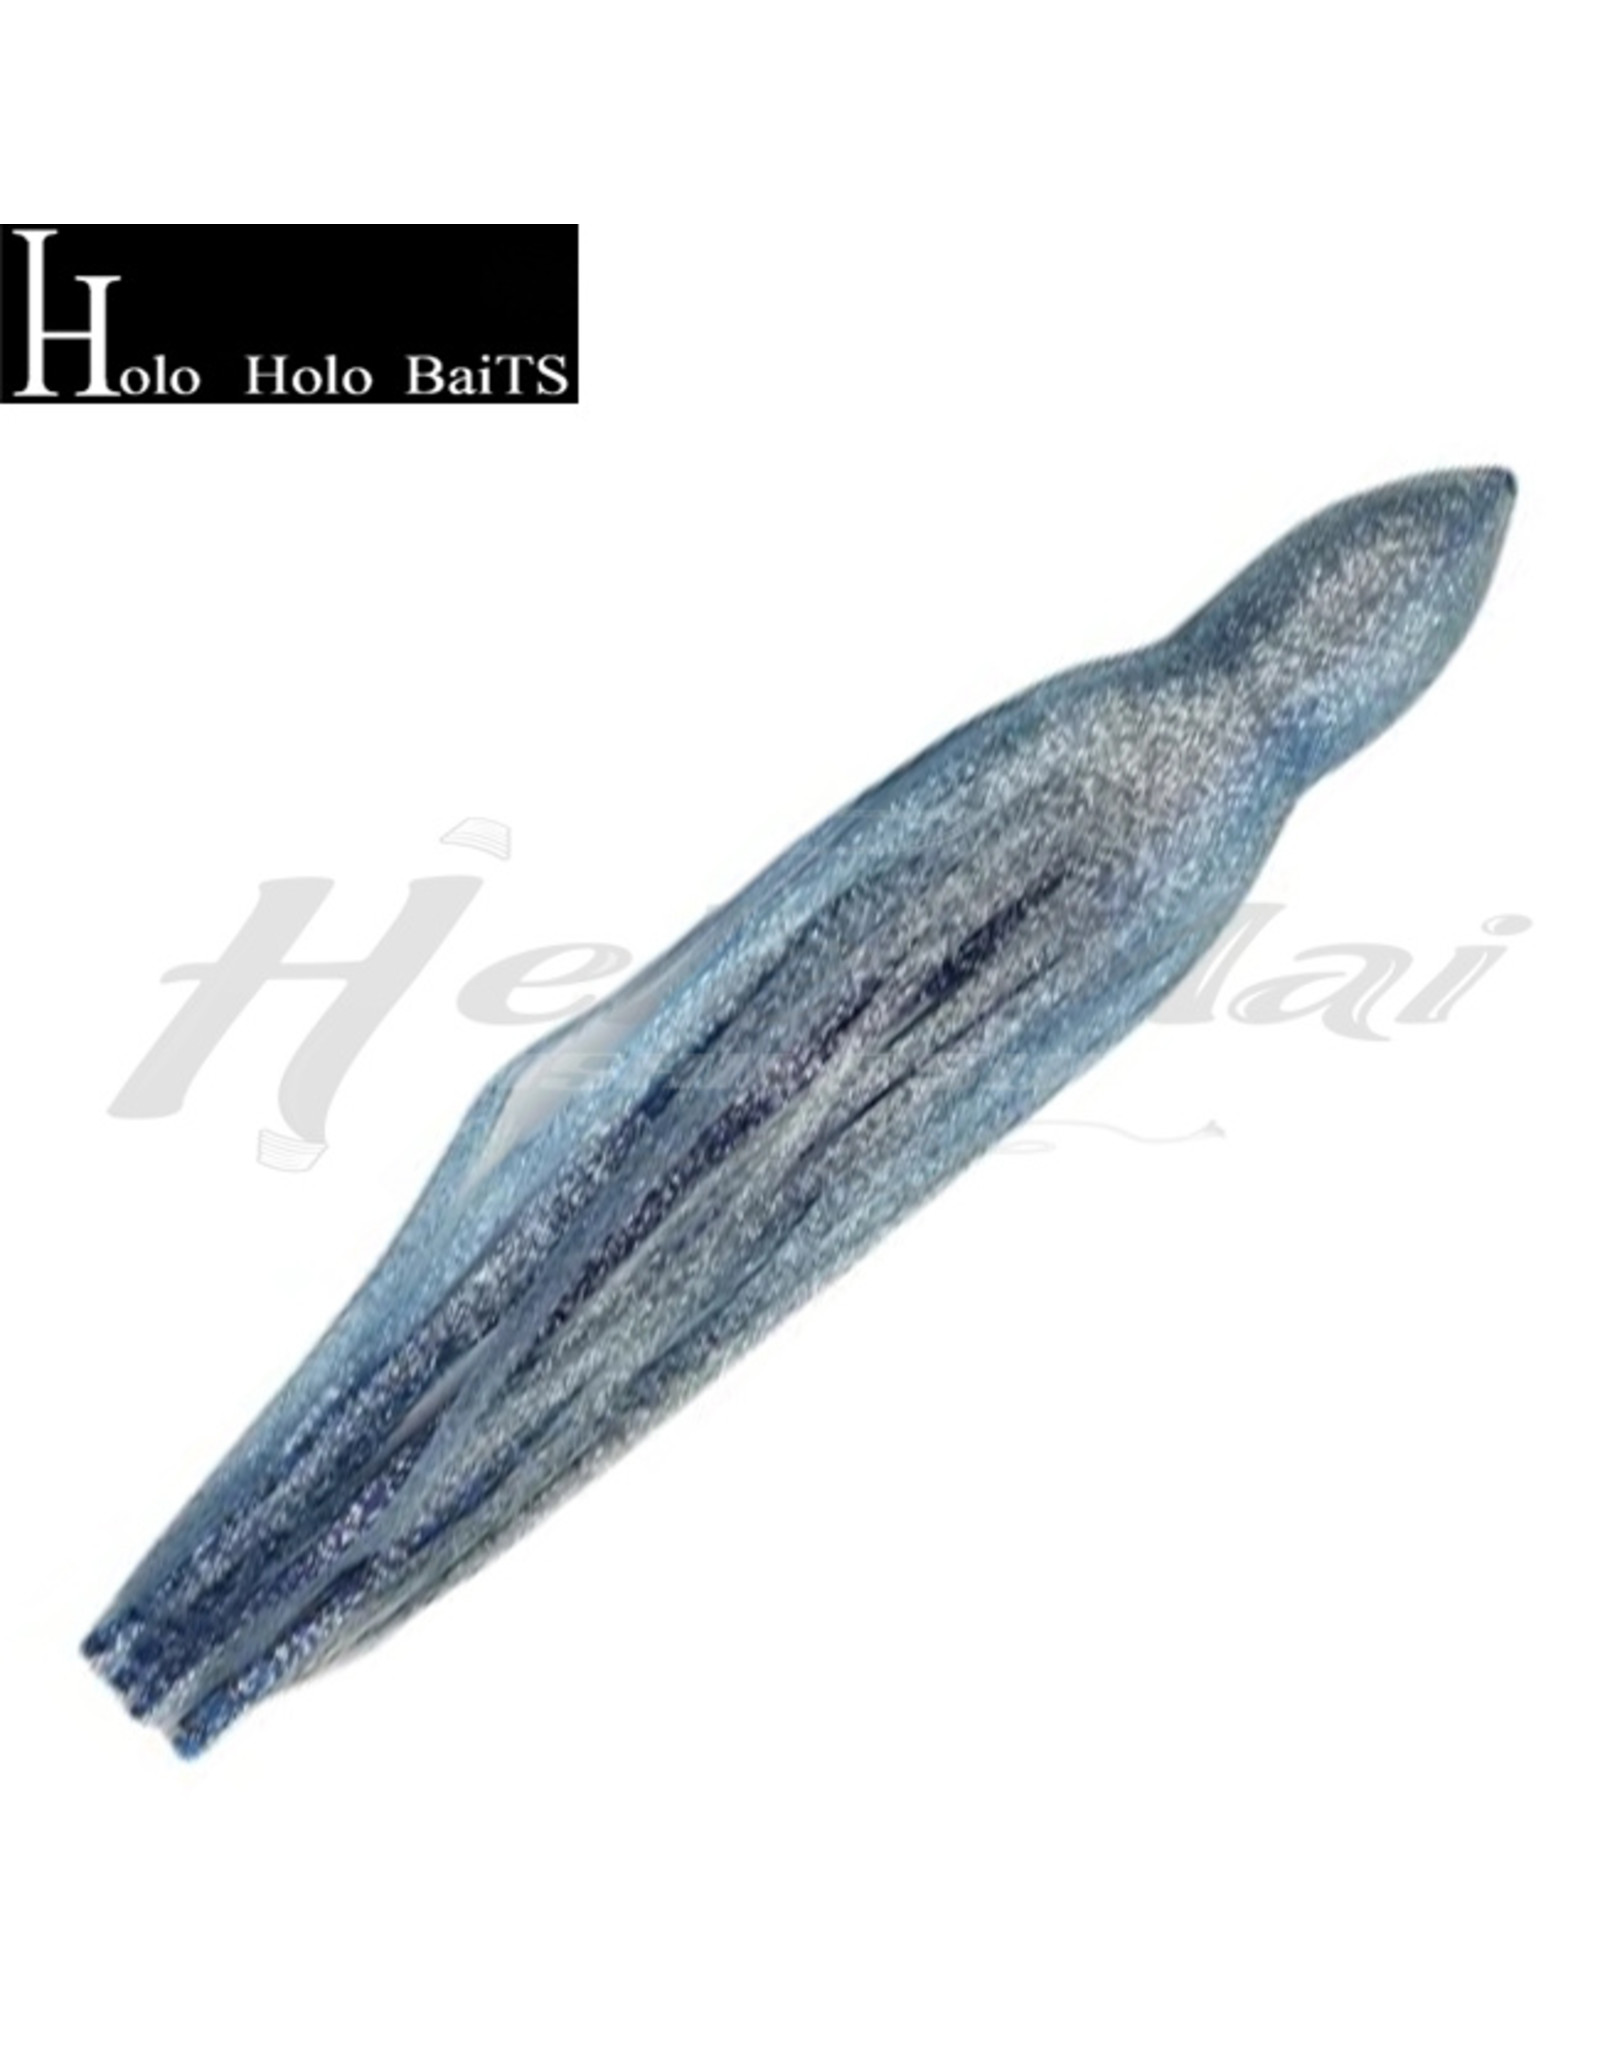 HOLO HOLO HAWAII (HHH) HH, 7" SQUID SKIRT BLUE SILVER GLITTER 0001